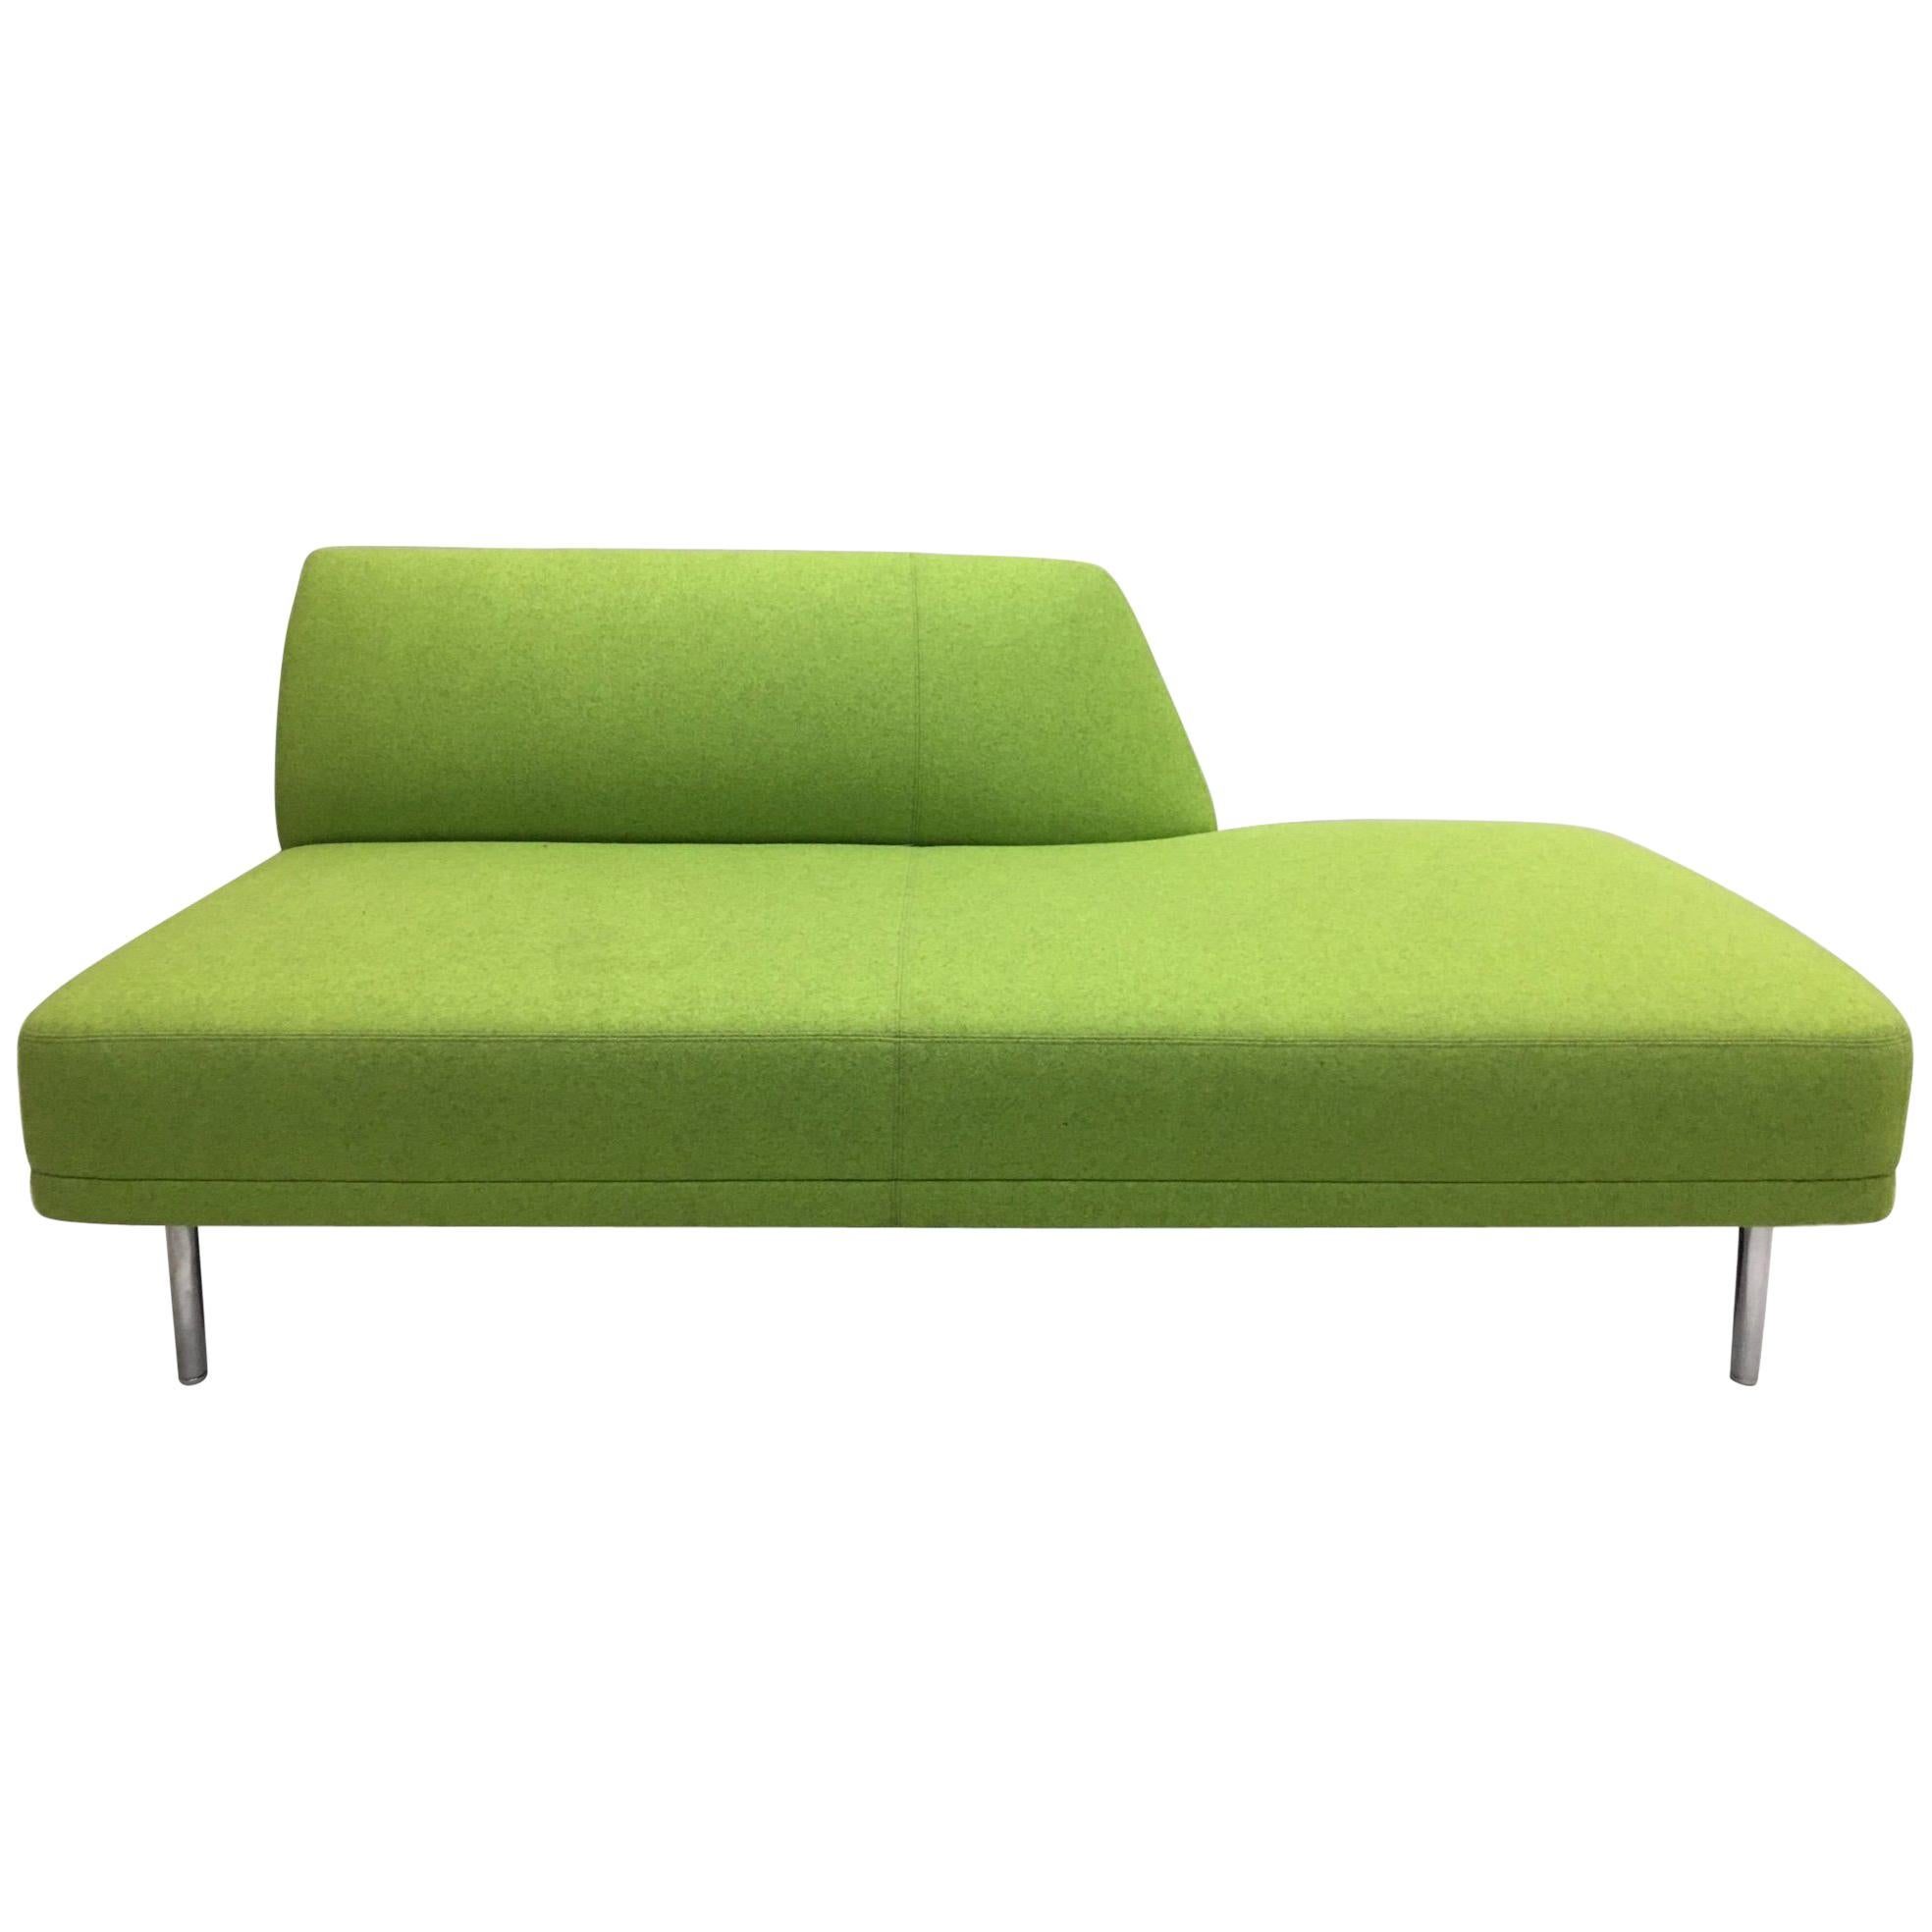 Italian Mid-Century Modern Style Moss Green Sofa, Love Seat, Marco Zanuso style